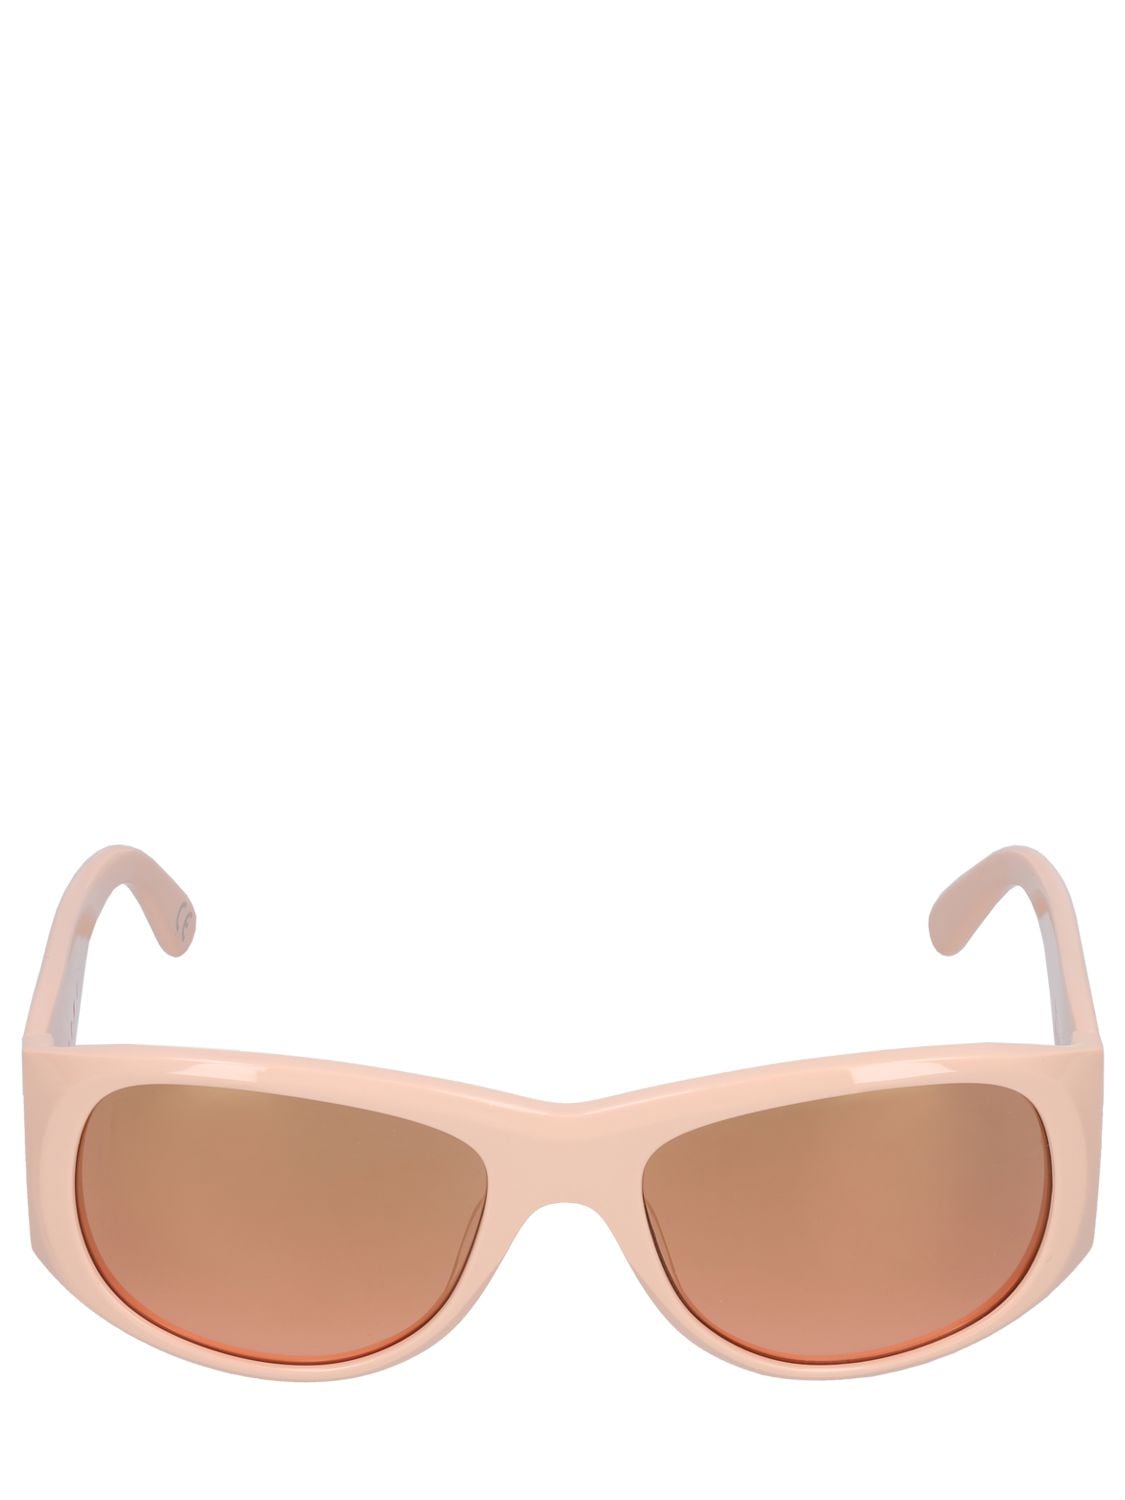 Image of Orinoco River Nude Acetate Sunglasses